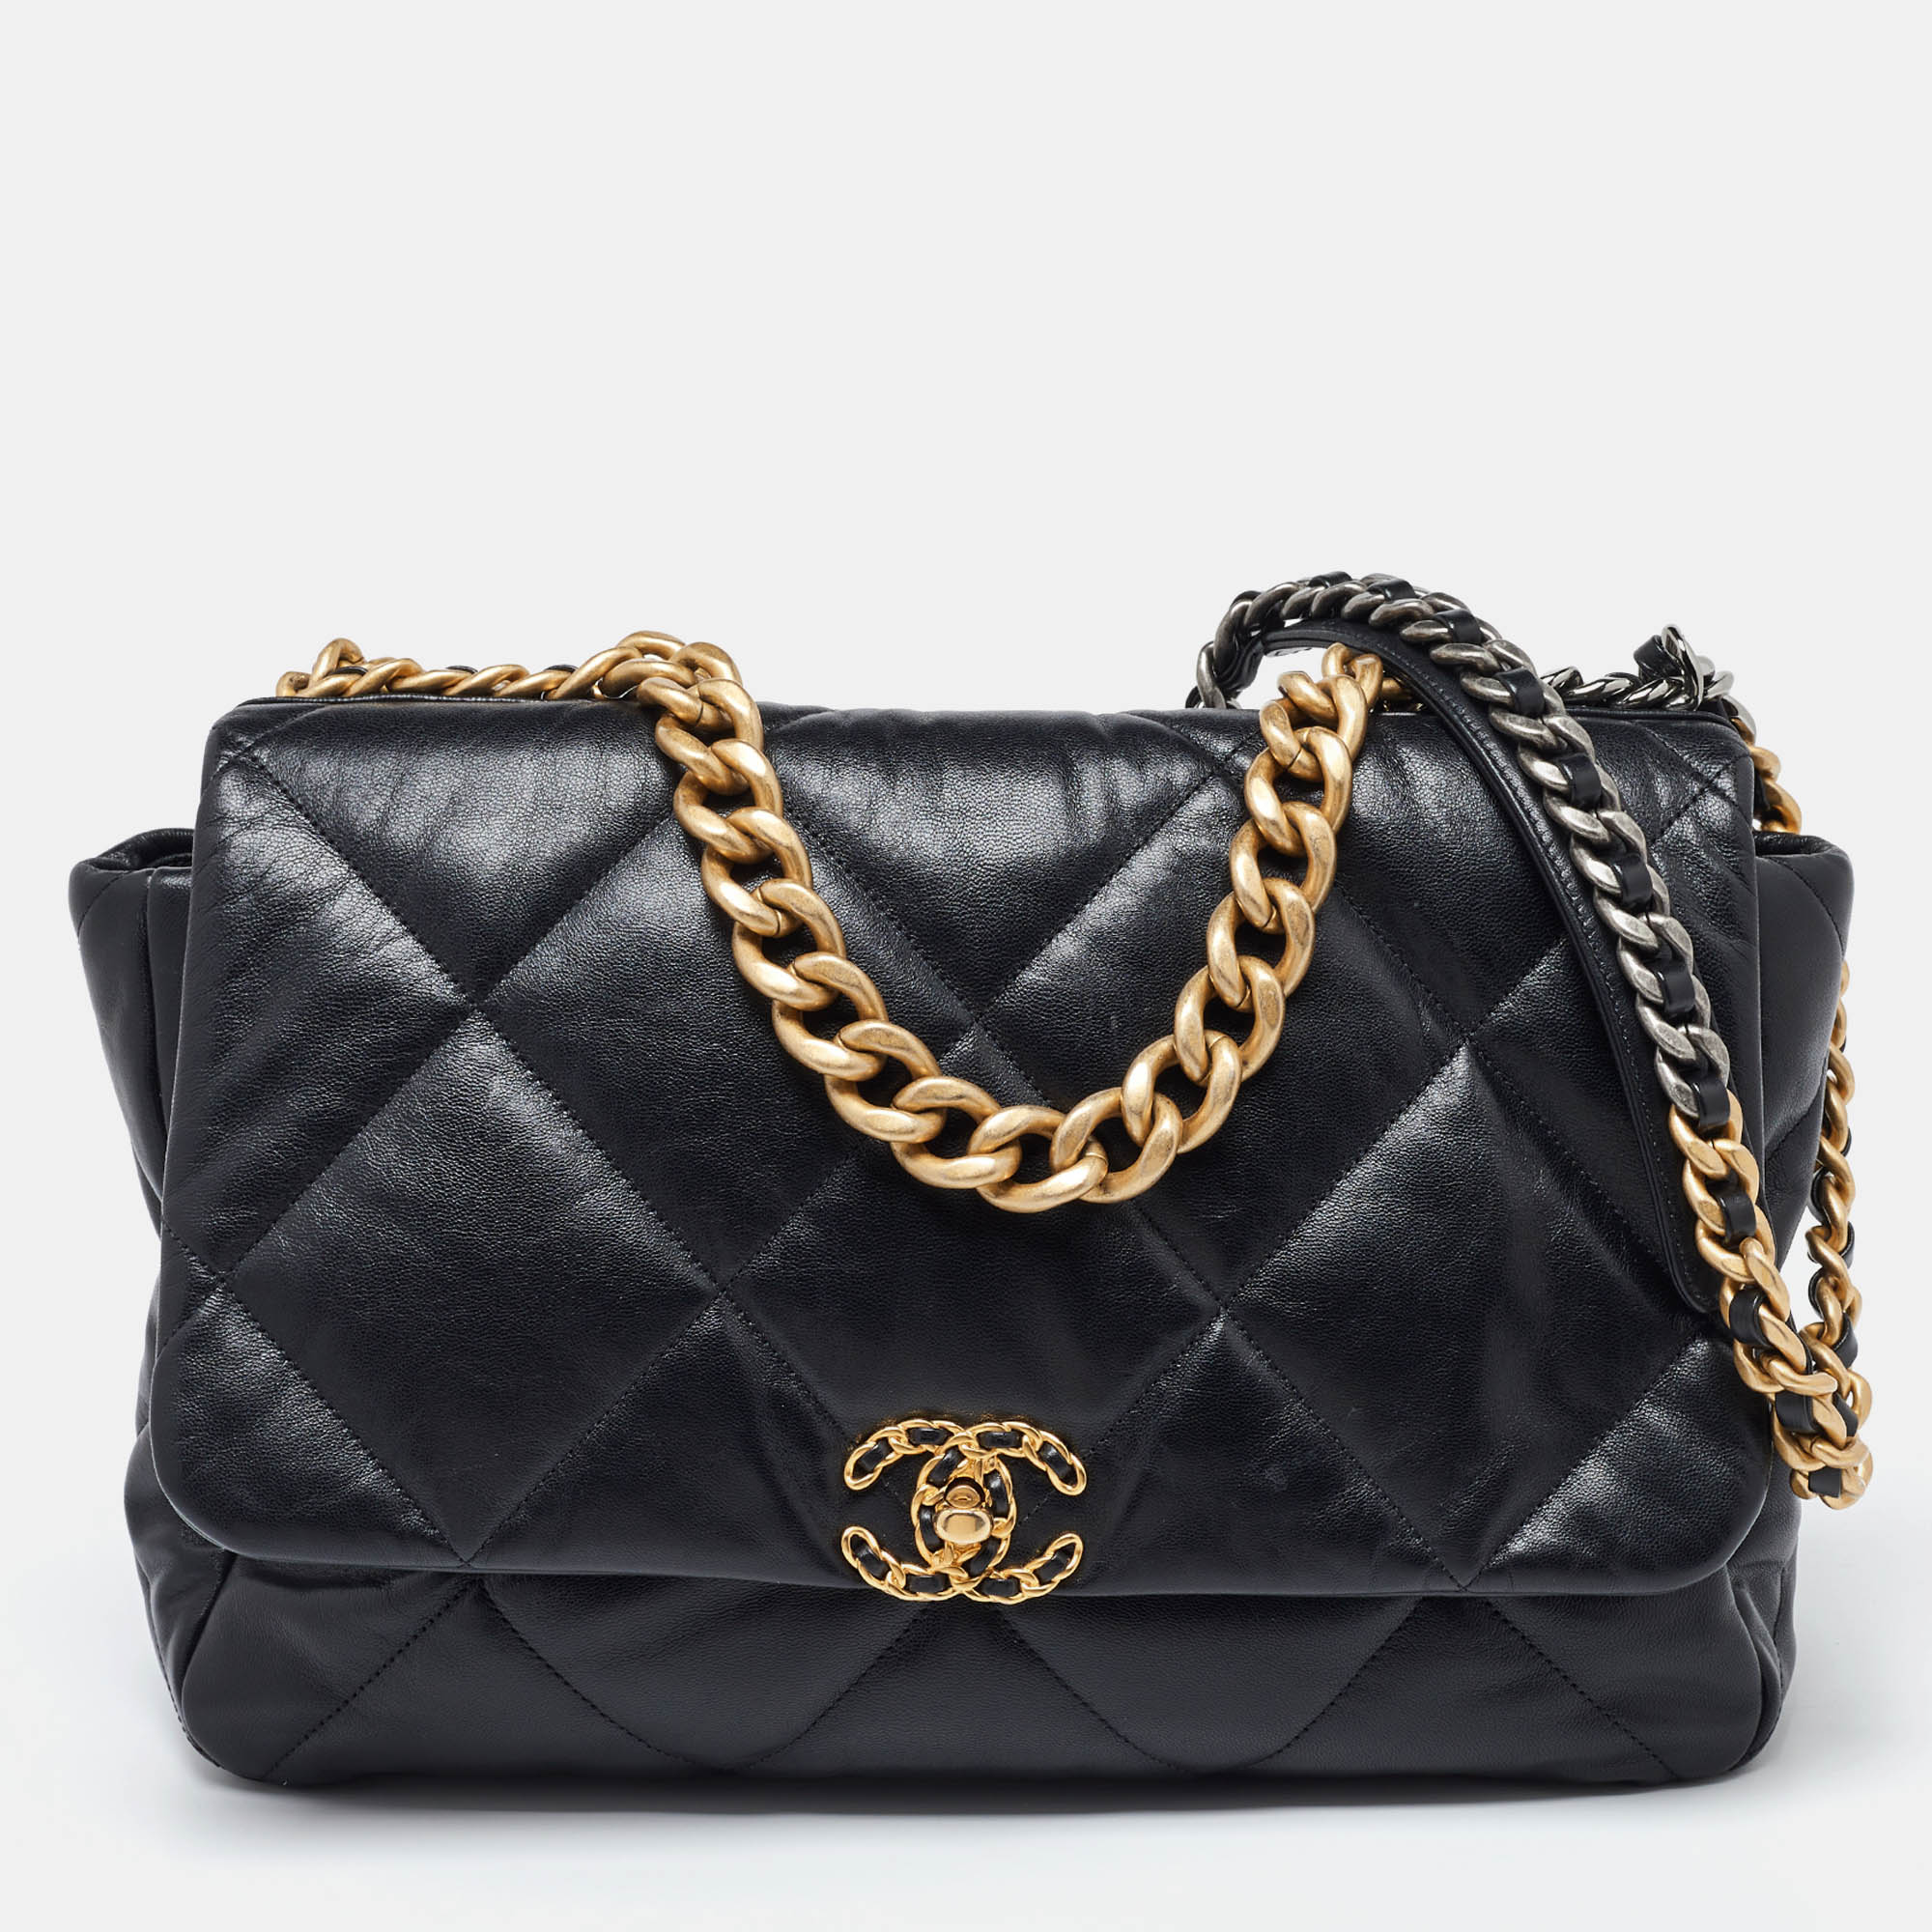 Chanel black quilted leather maxi 19 shoulder bag